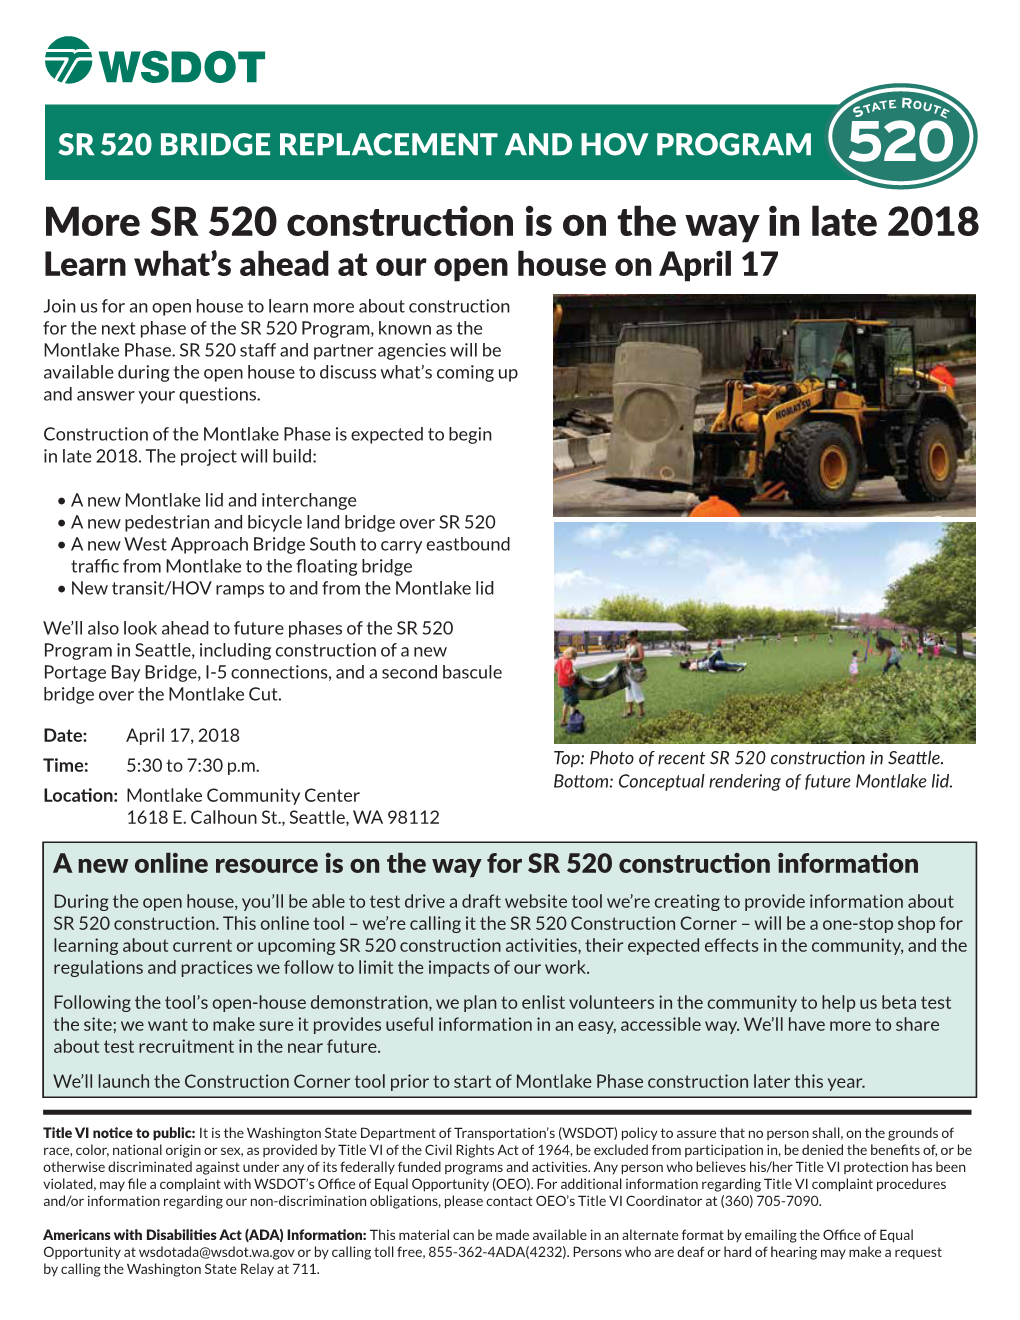 SR 520 Bridge Replacement and HOV Program April 17, 2018 Open